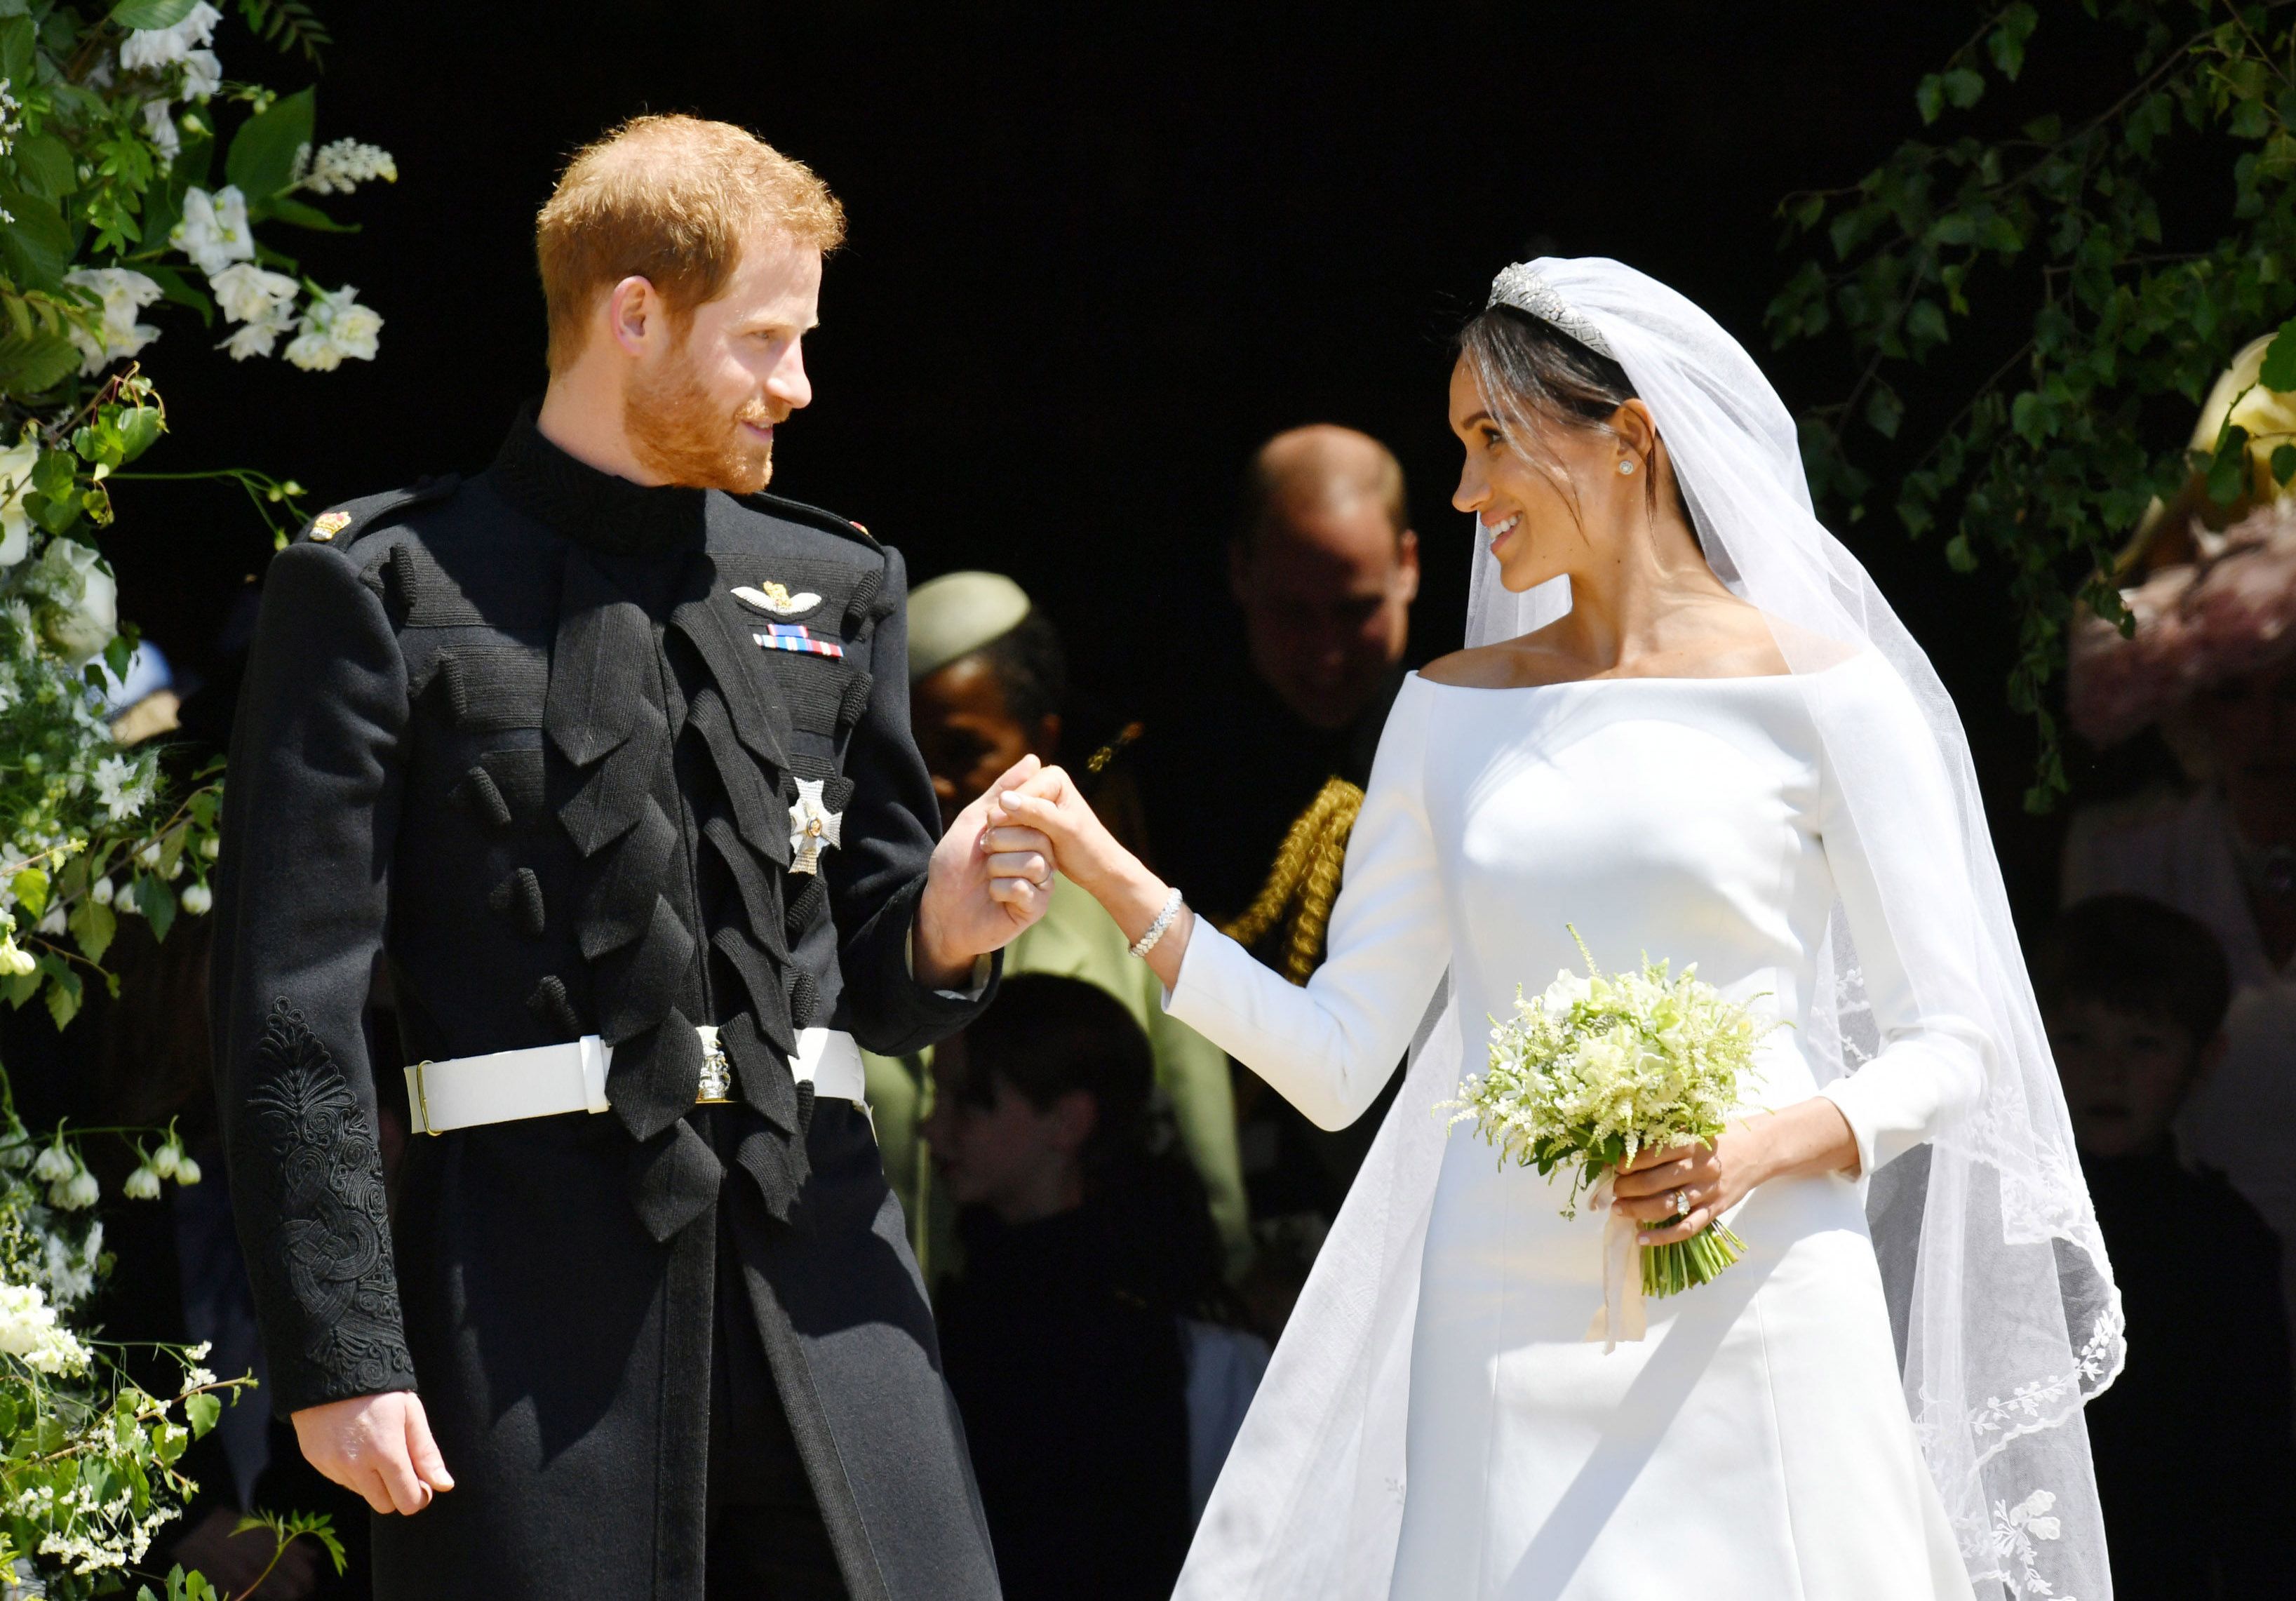 Foto Pernikahan Pangeran Harry - KibrisPDR